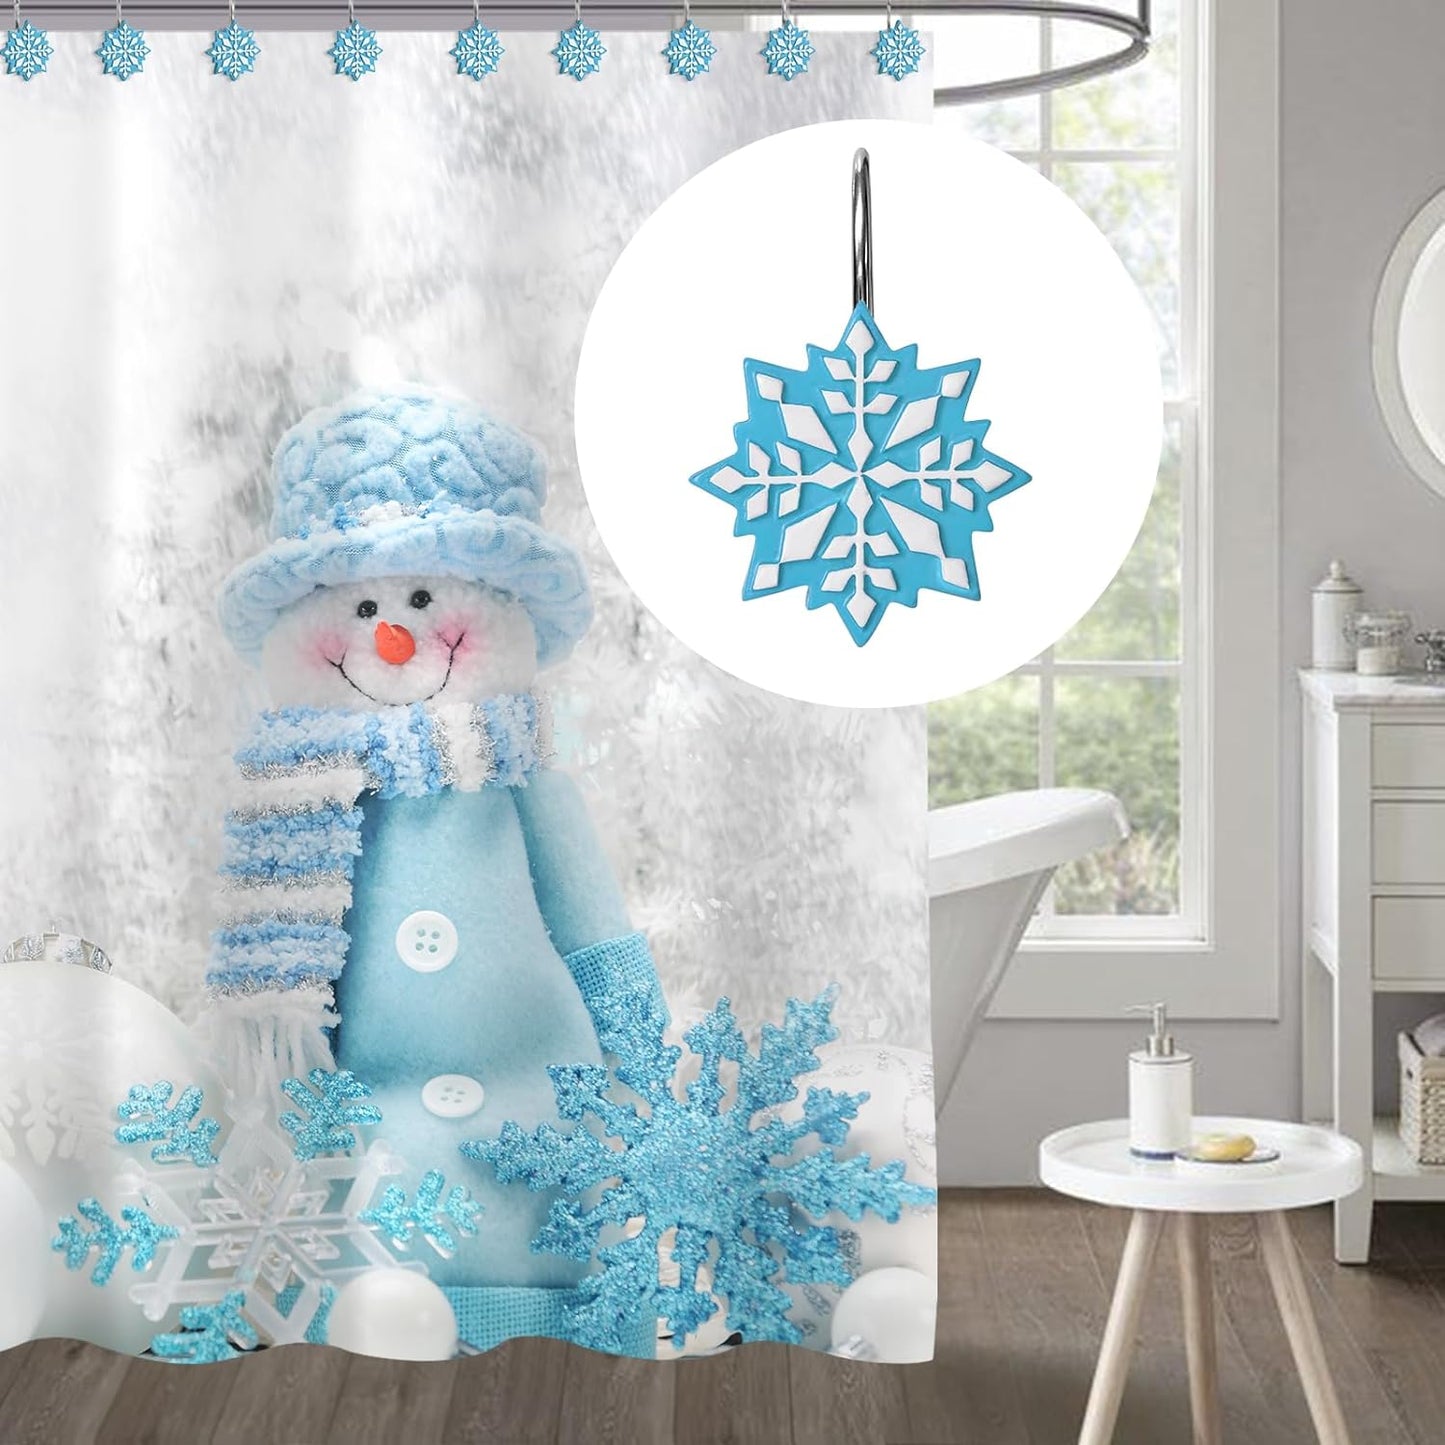 Sunlit Merry Christmas Shower Curtain Hooks White Reindeer Red Shower Curtain Rings, Resin, Winter Bathroom Decoration - 12 Pack